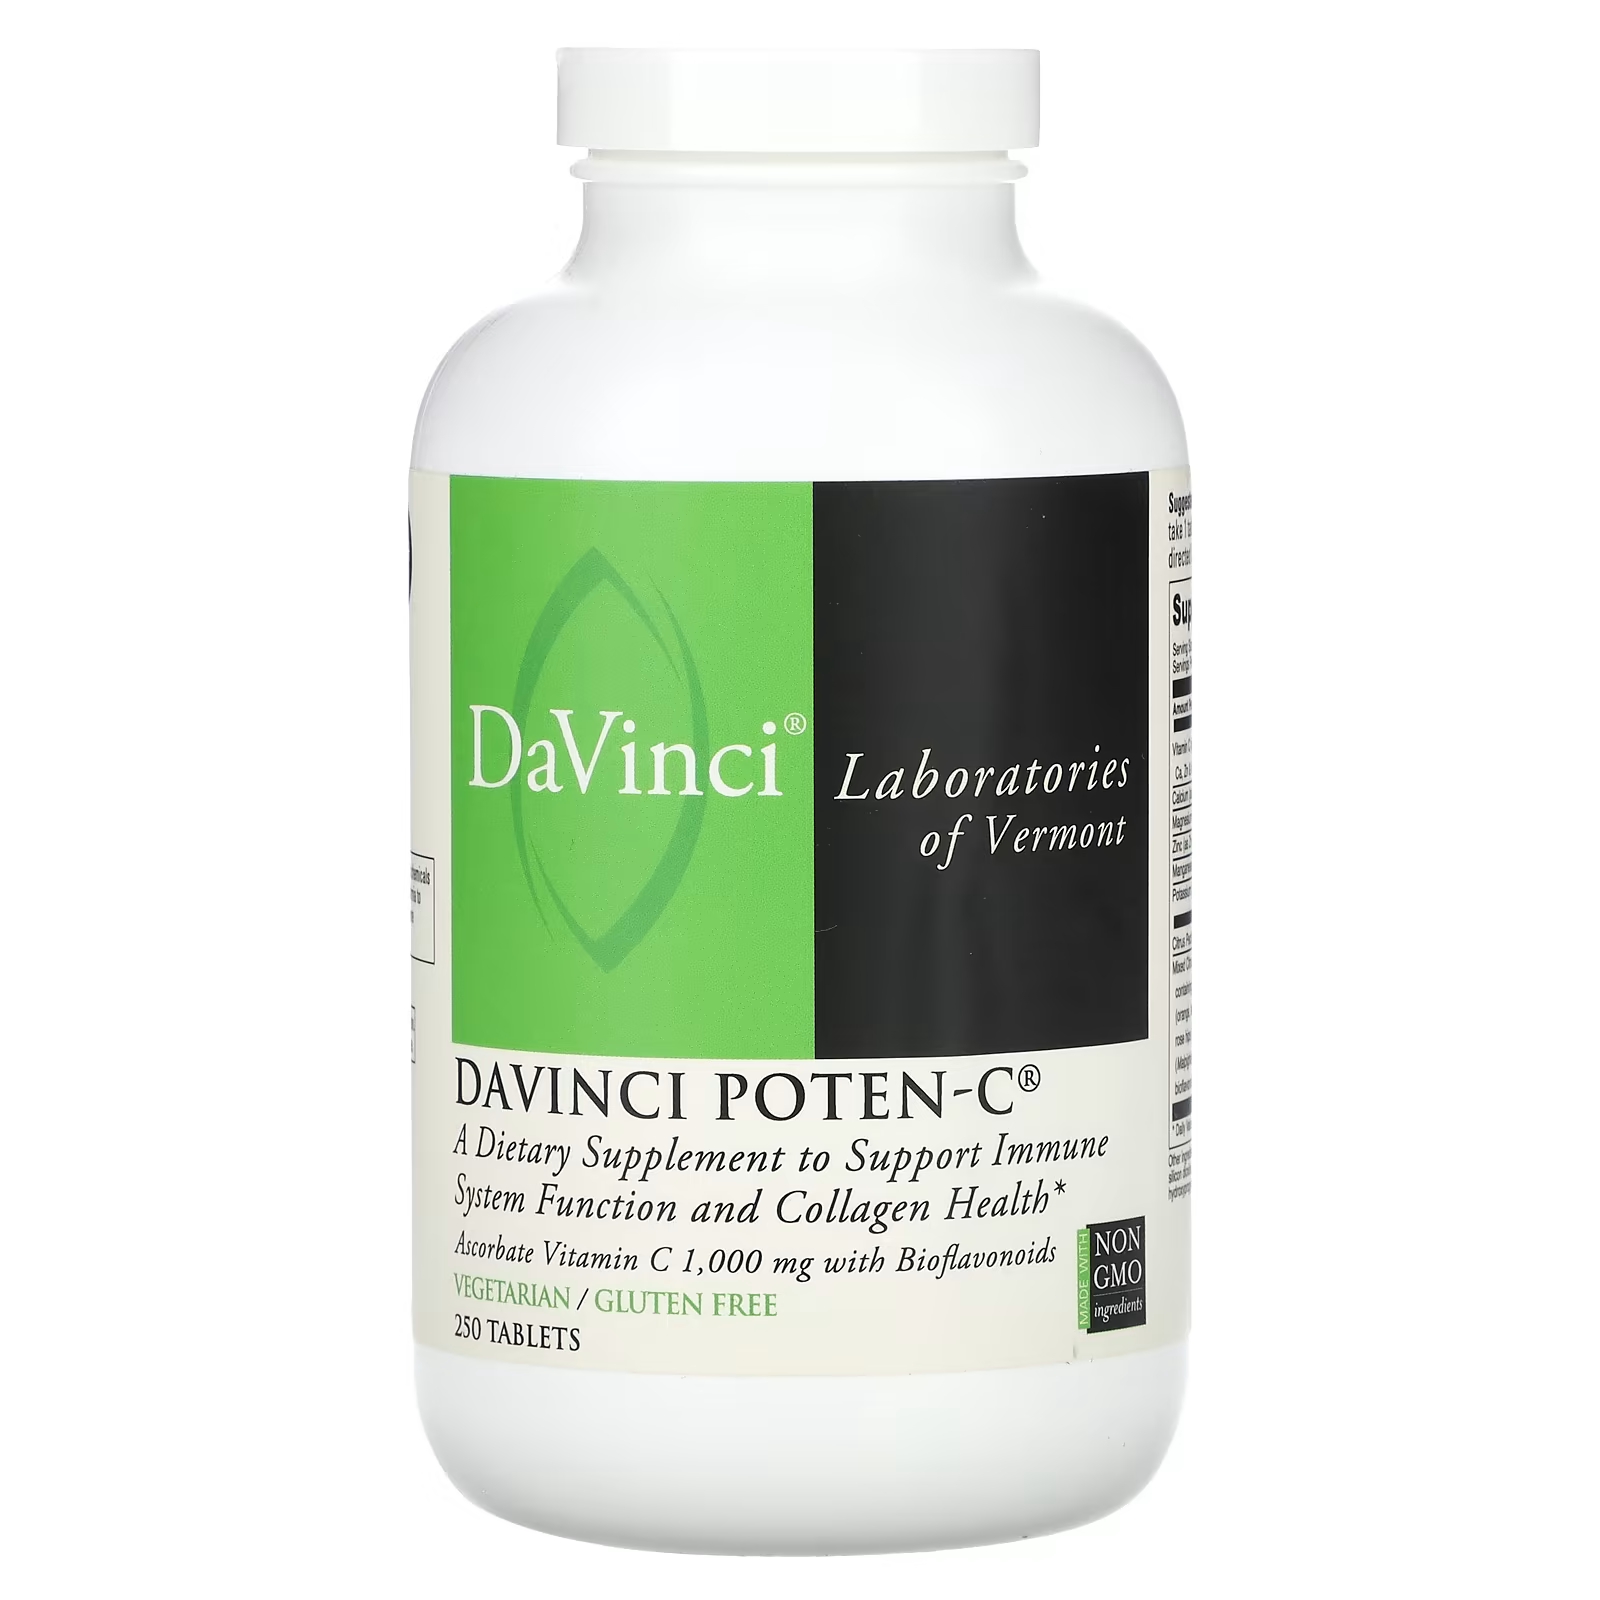 цена Пищевая добавка DaVinci Laboratories of Vermont Davinci Poten-C, 250 таблеток